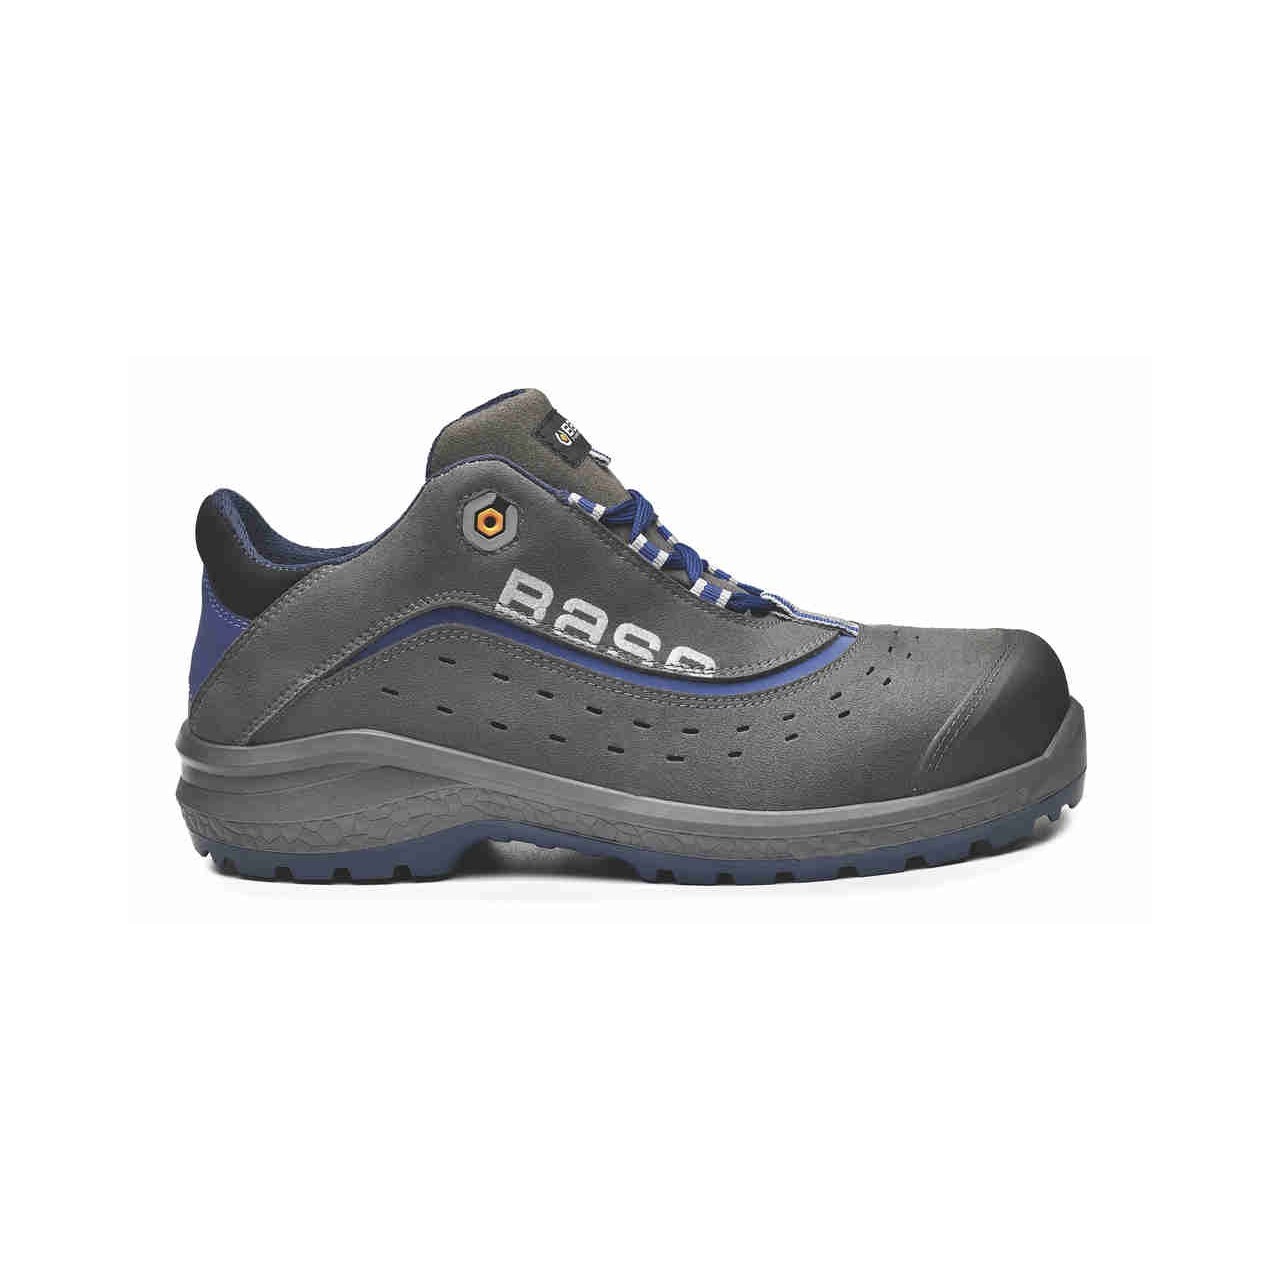 Zapato de seguridad Base Be-Light S1P SRC